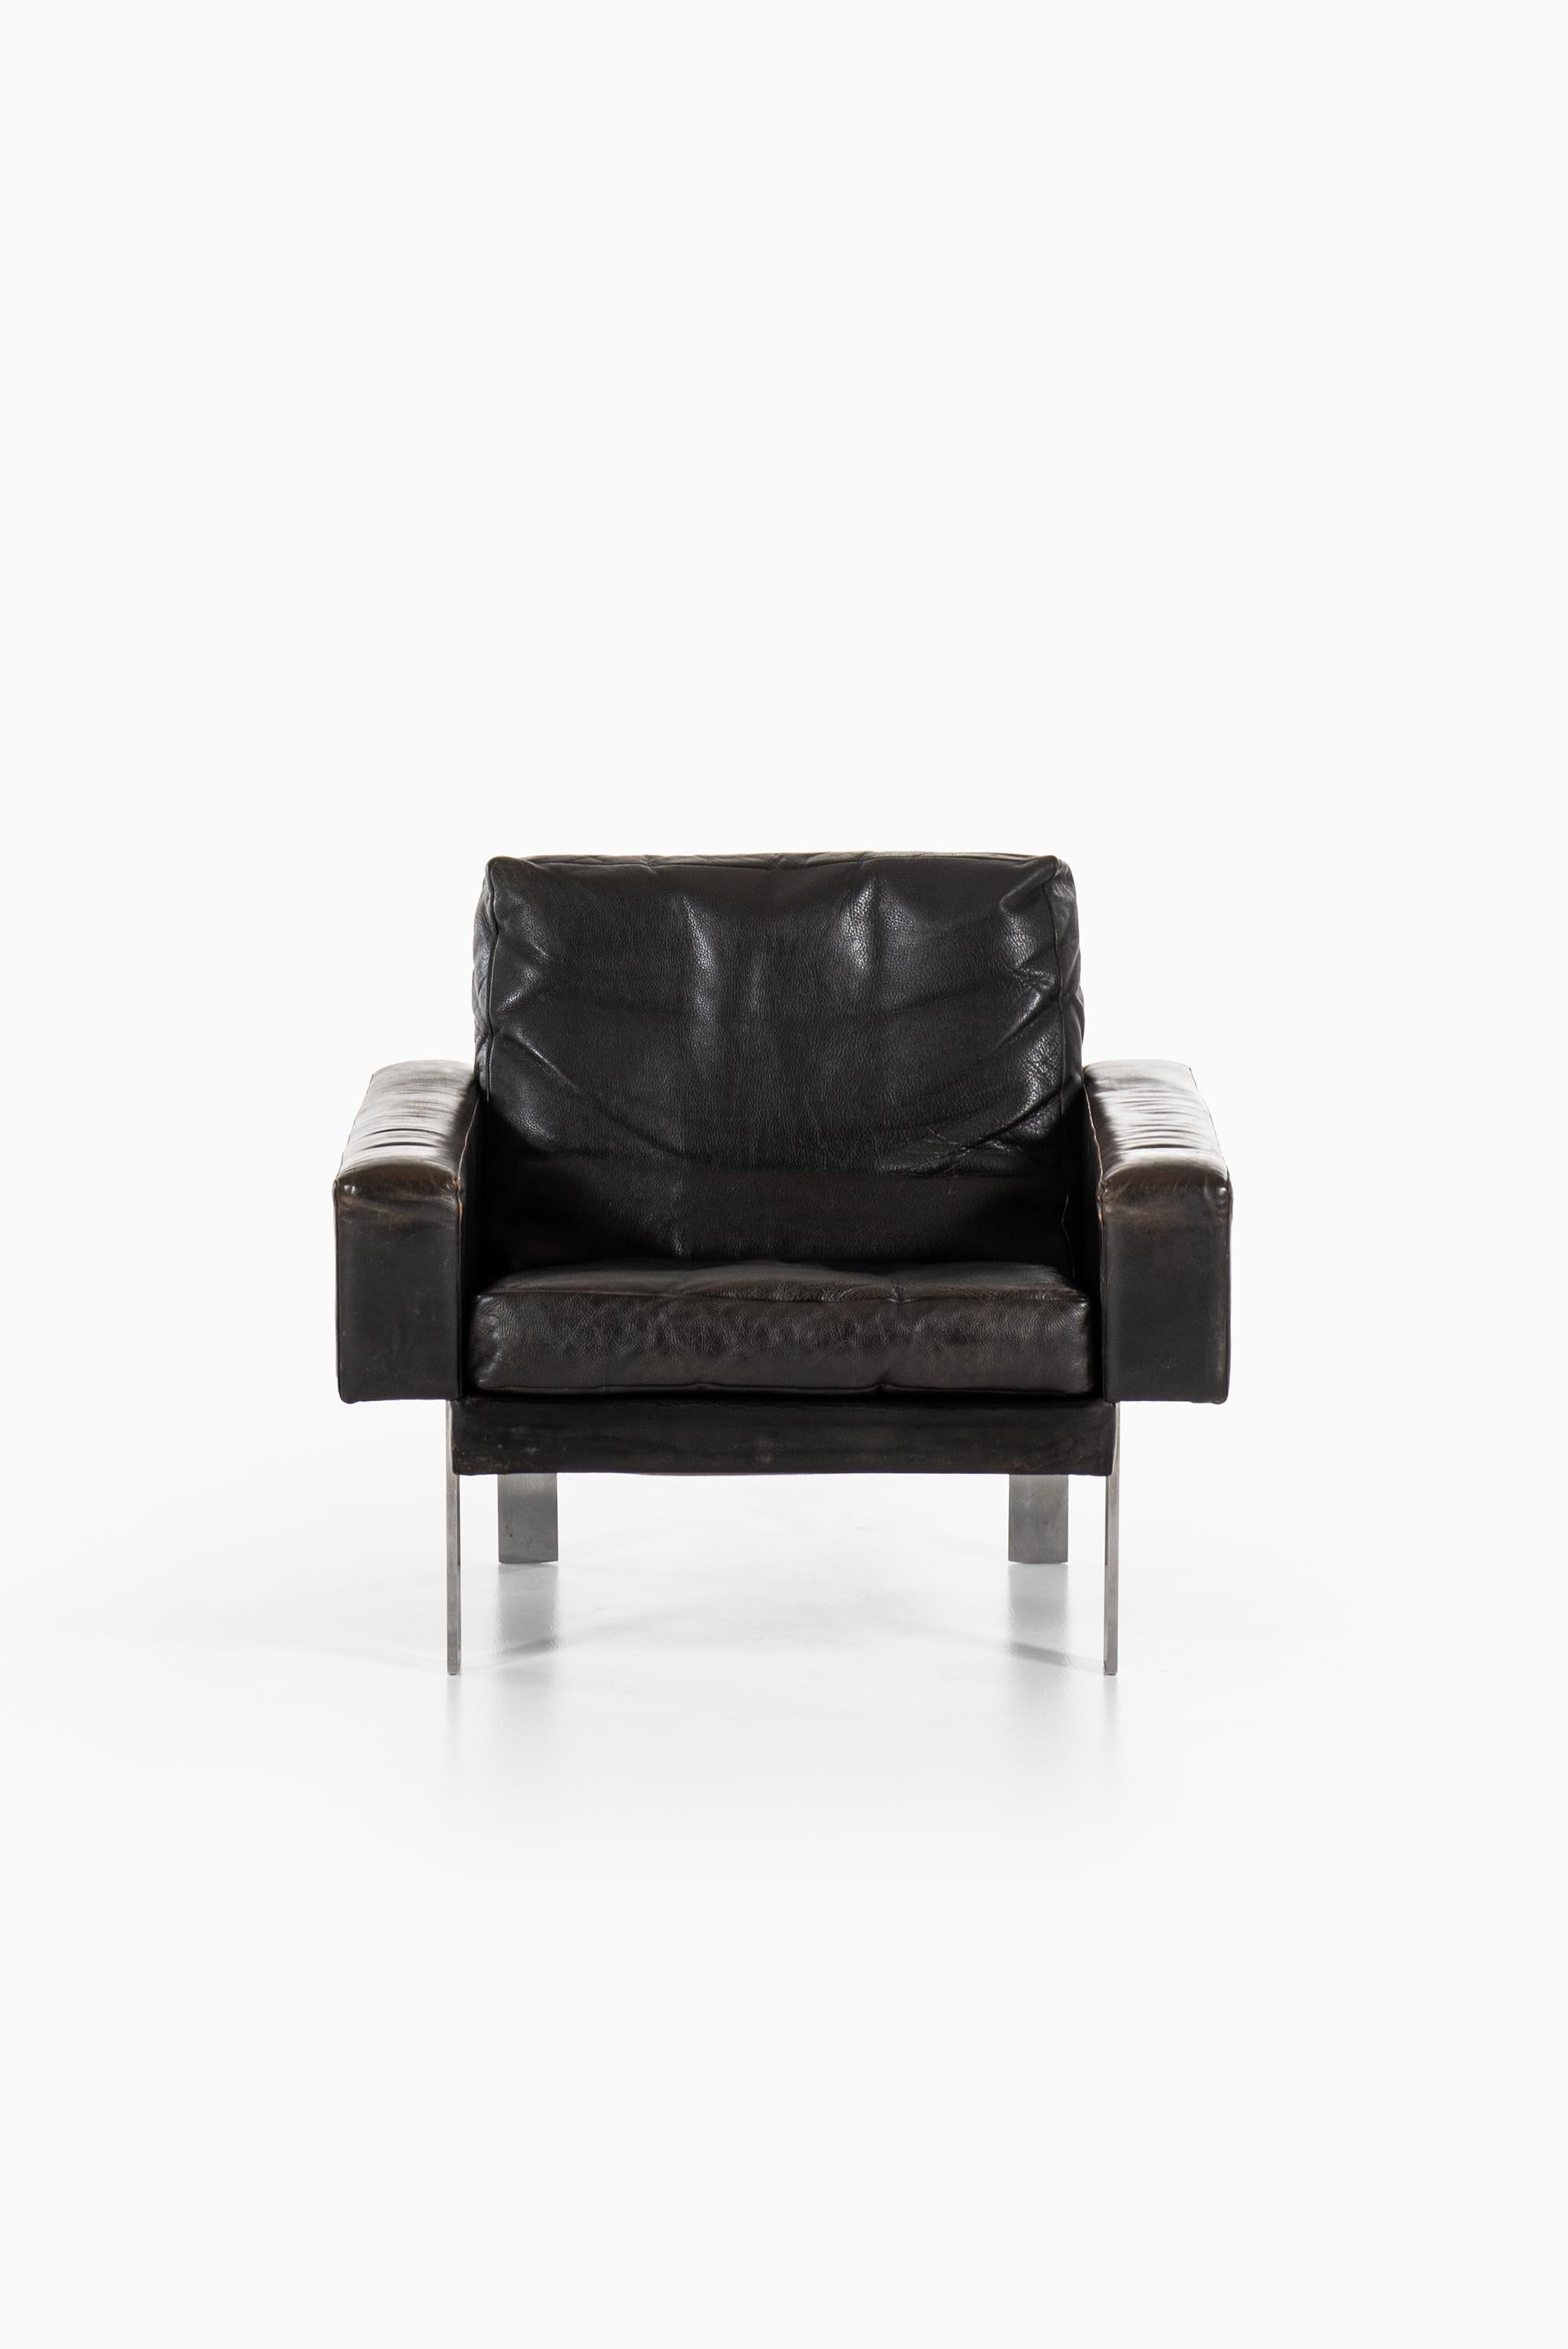 Very rare easy chair designed by Illum Wikkelsø. Produced by Michael Laursen in Denmark.